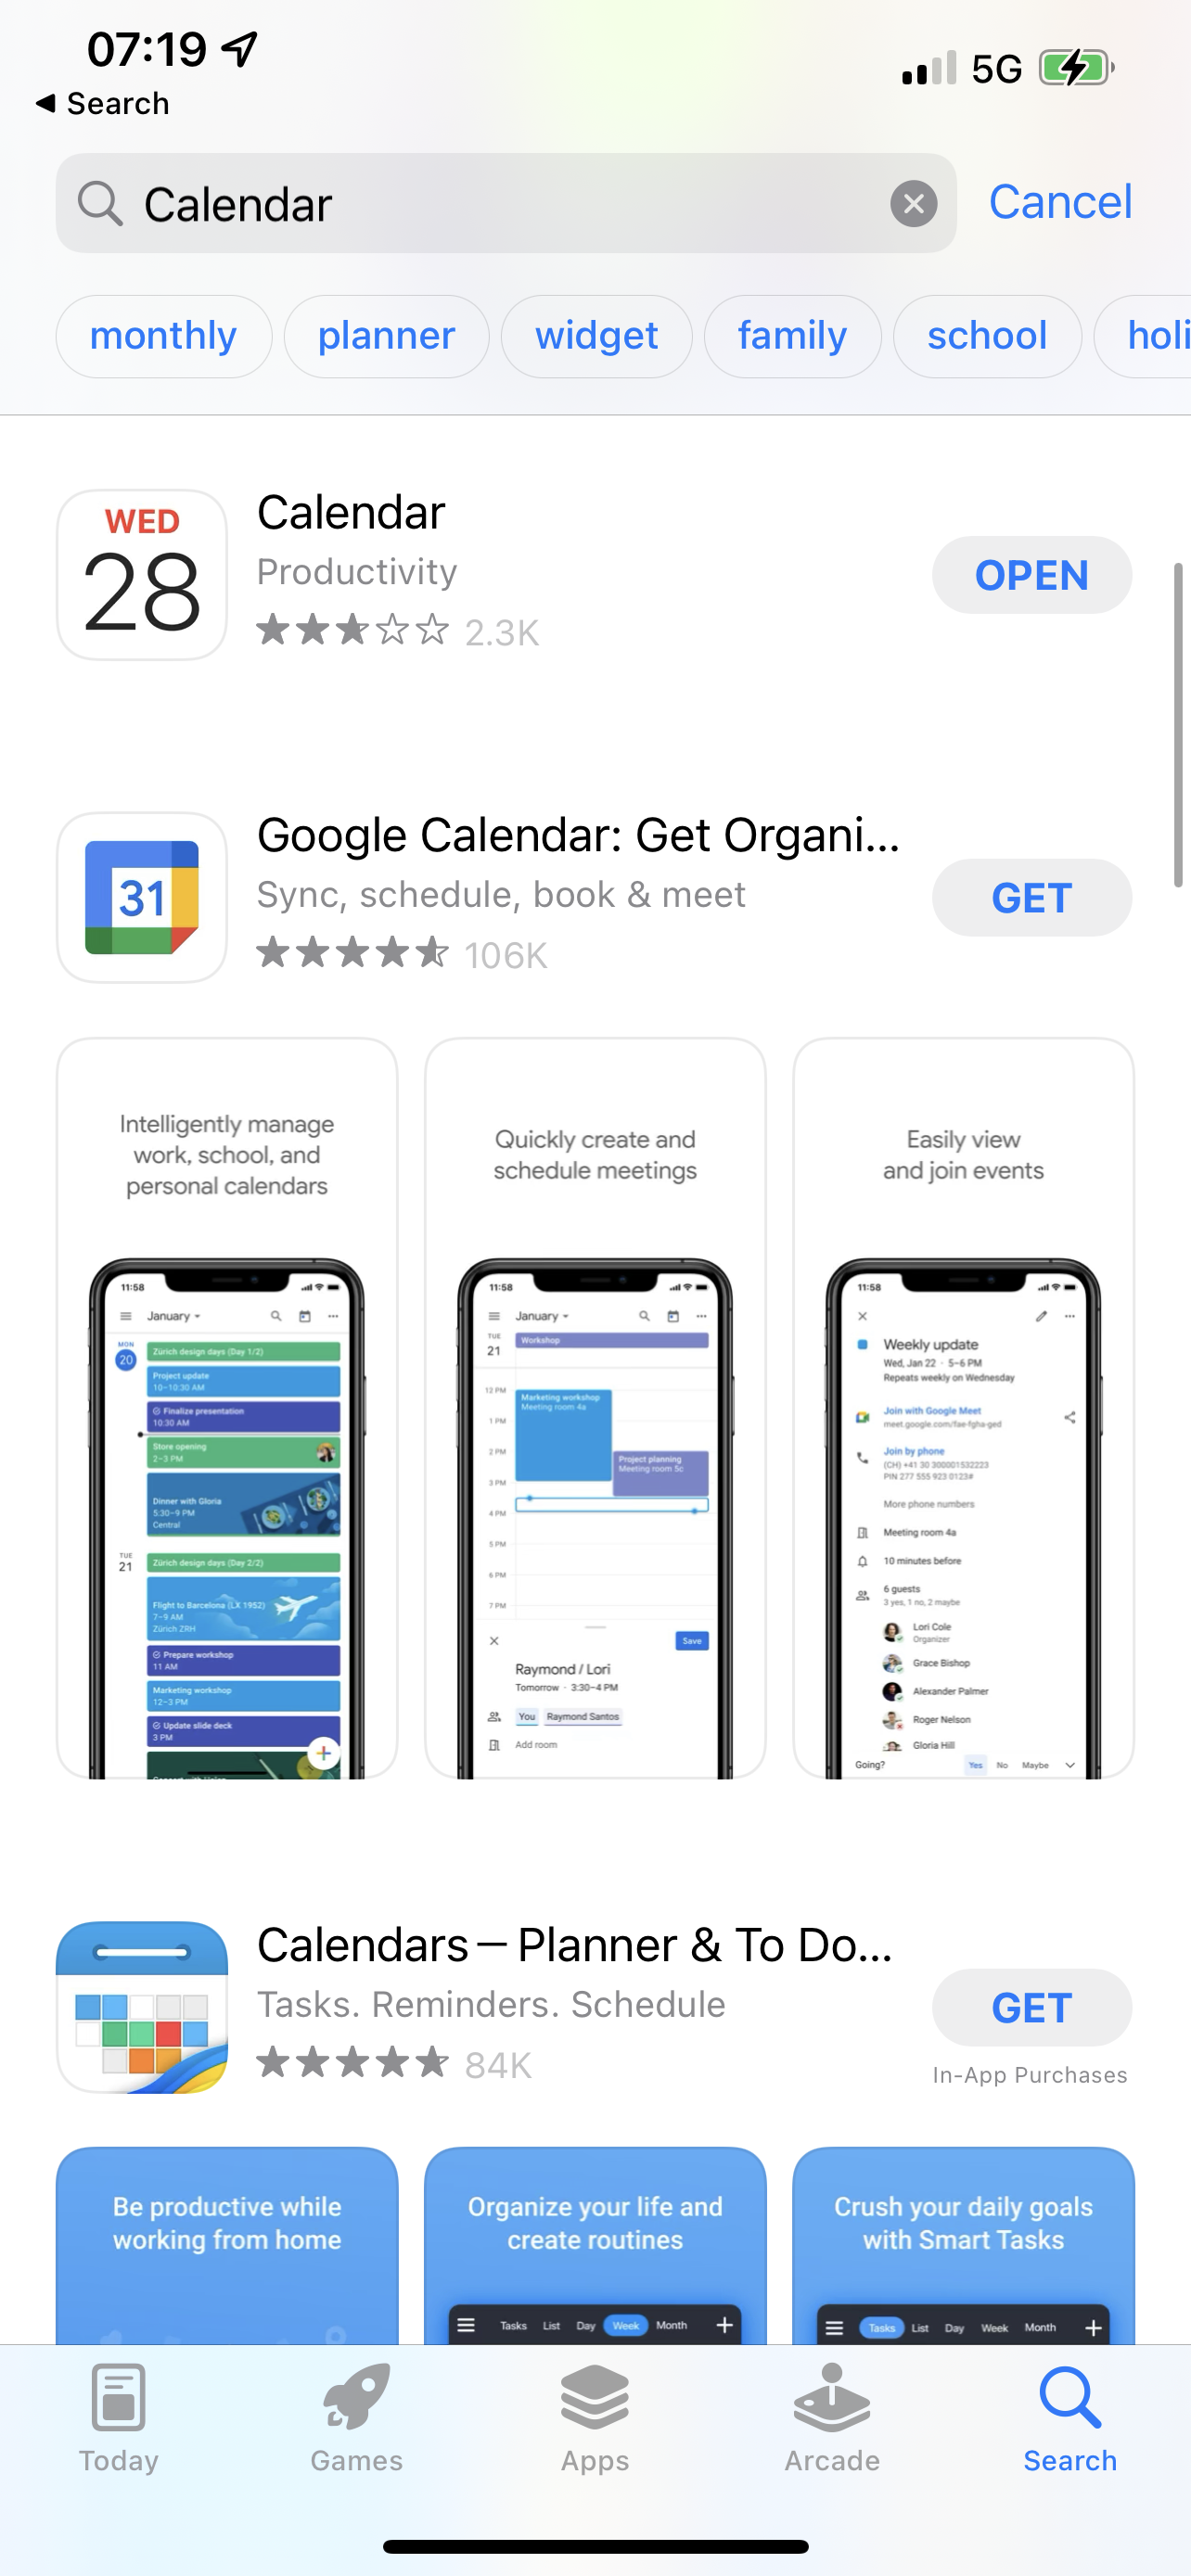 calendar in app store results